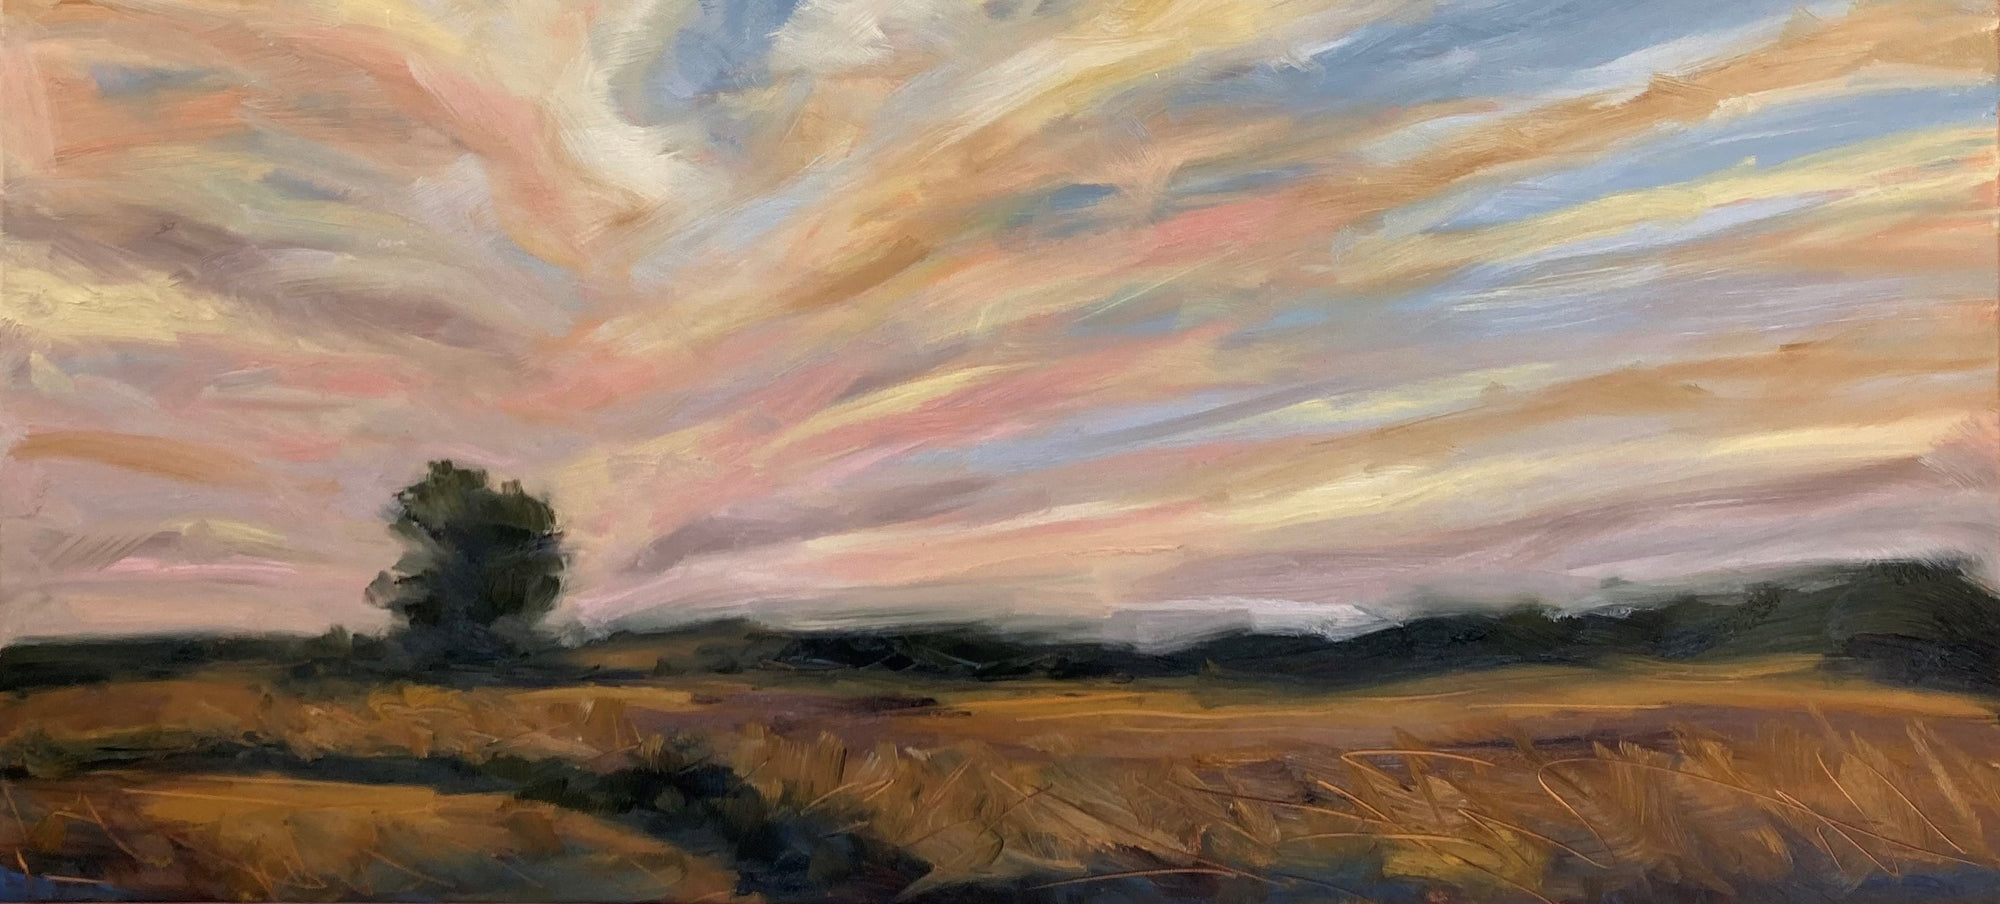 Dreaming Original Oil Landscape Painting Detail 1